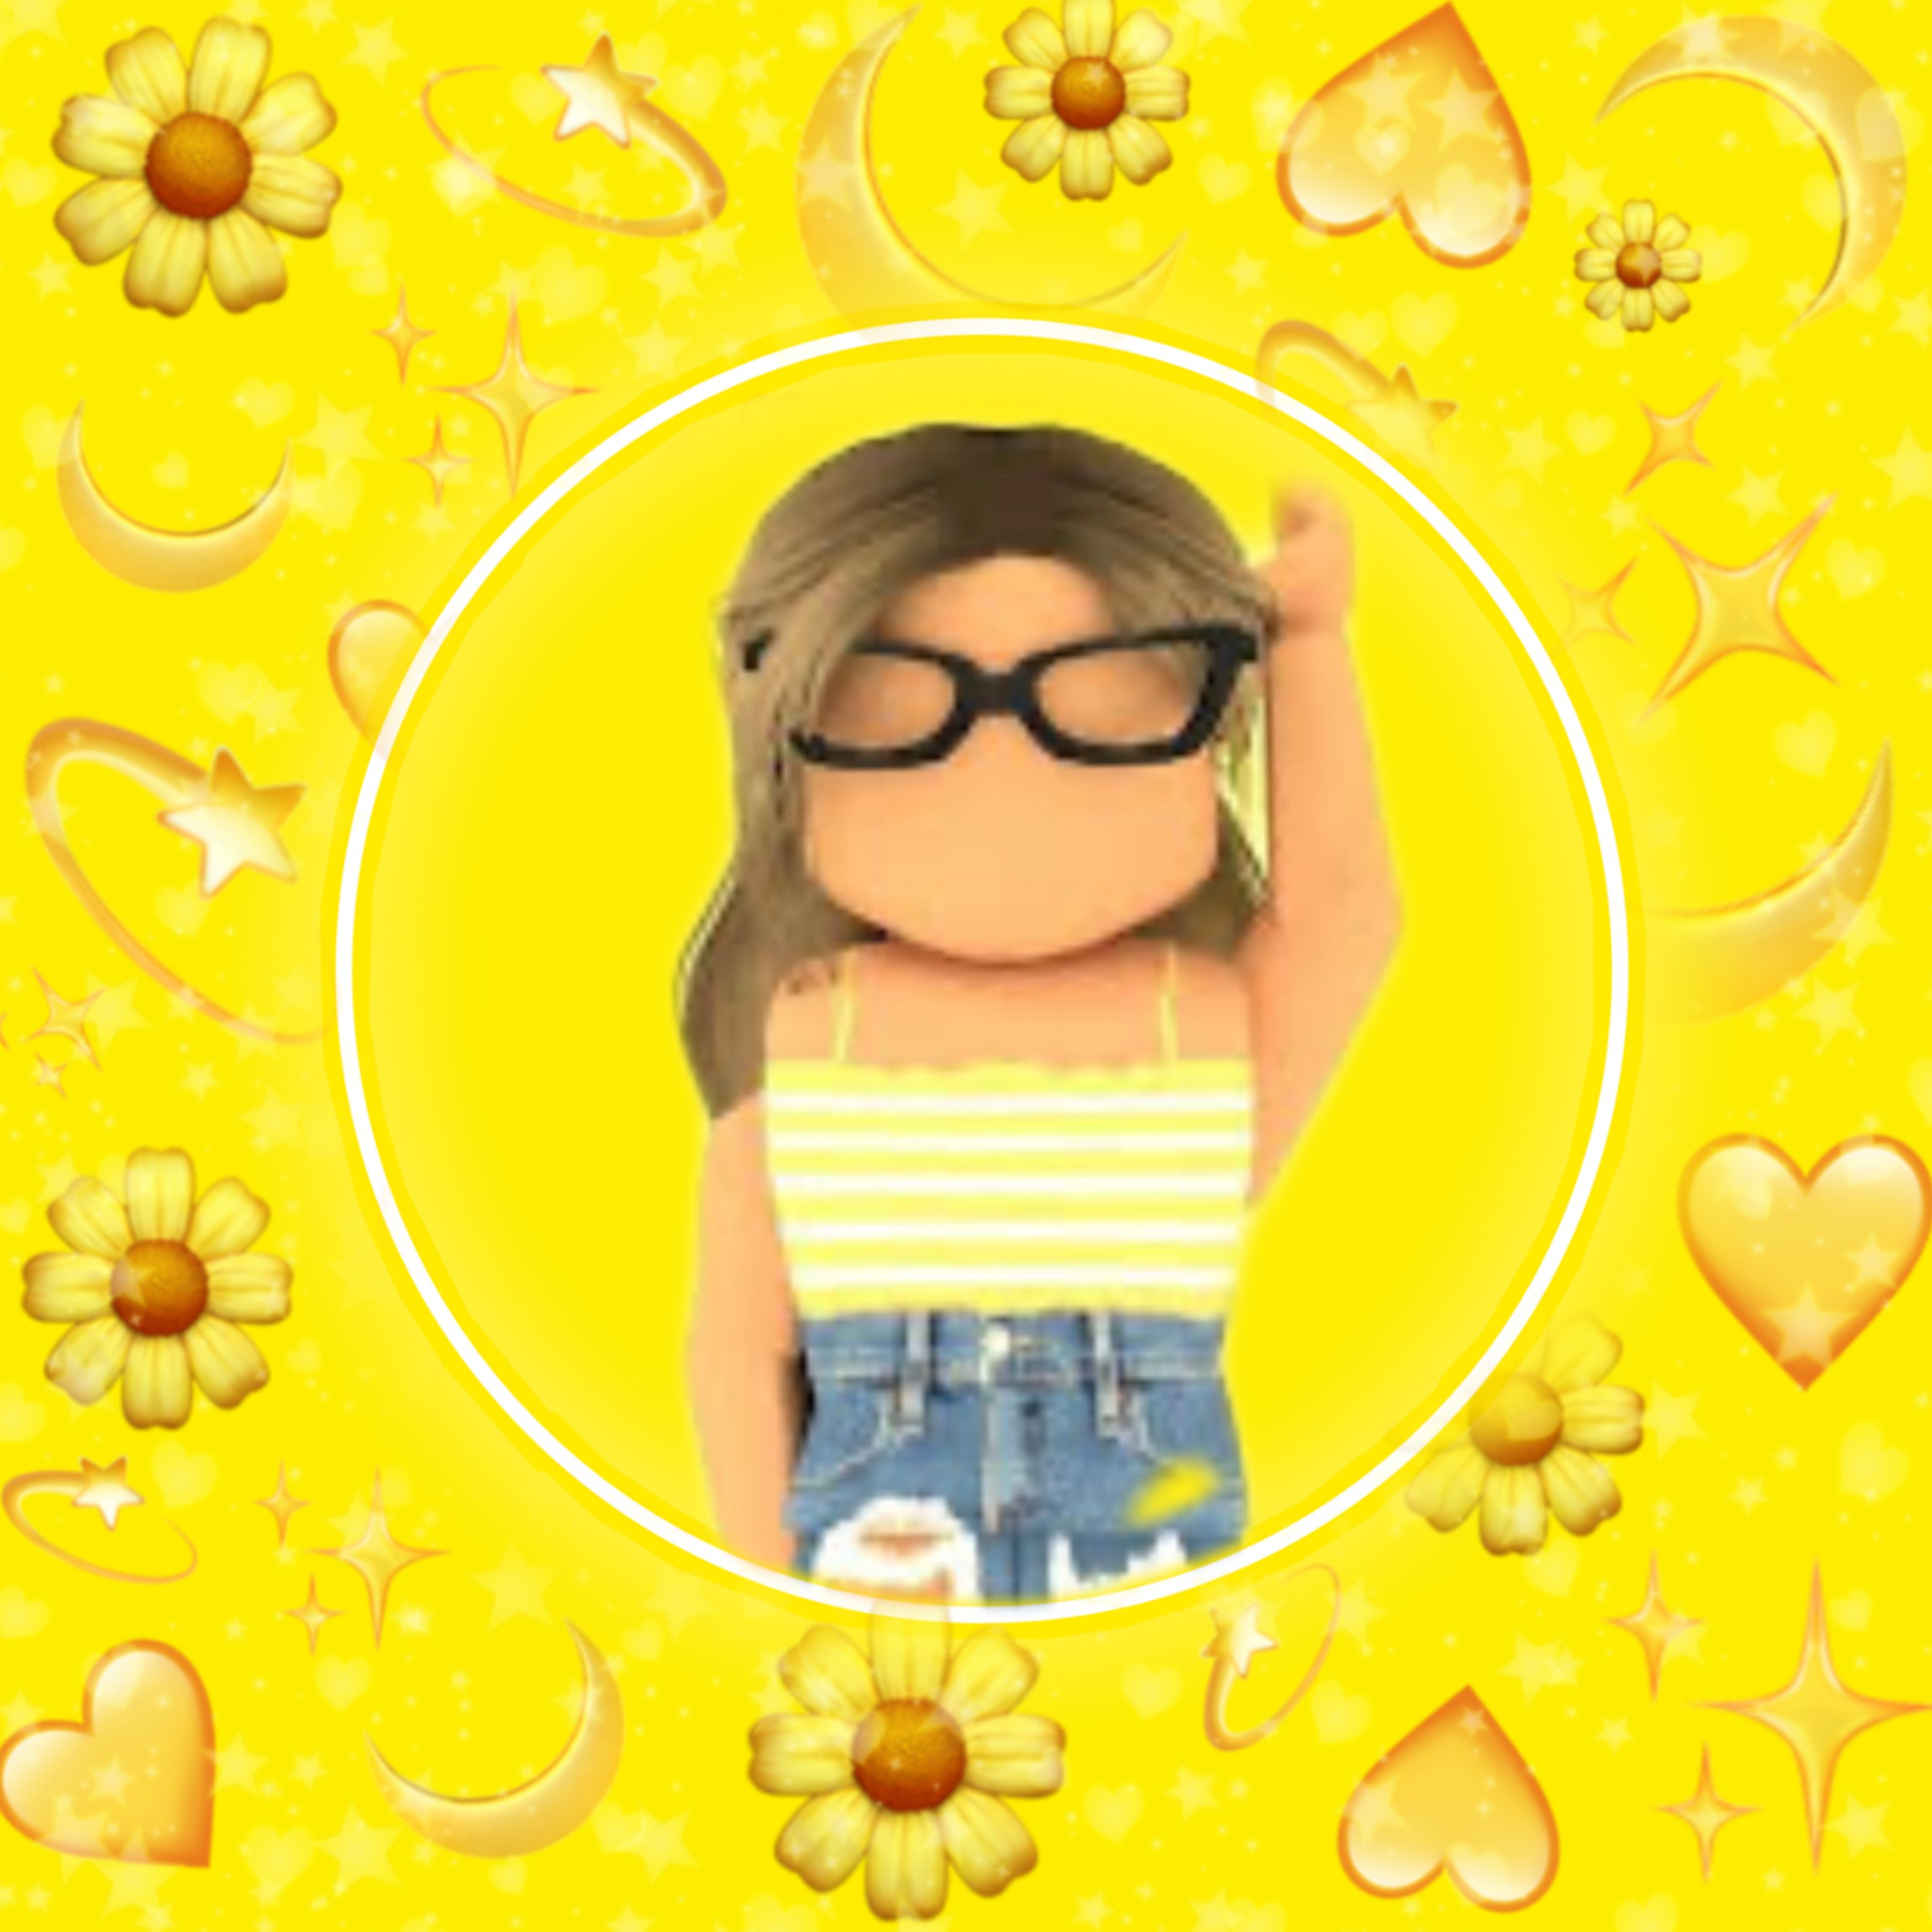 Roblox Yellow Girl Image By ｂｌｉｎｇ ｃｌｏｔｈｉｎｇ - roblox character yellow girl